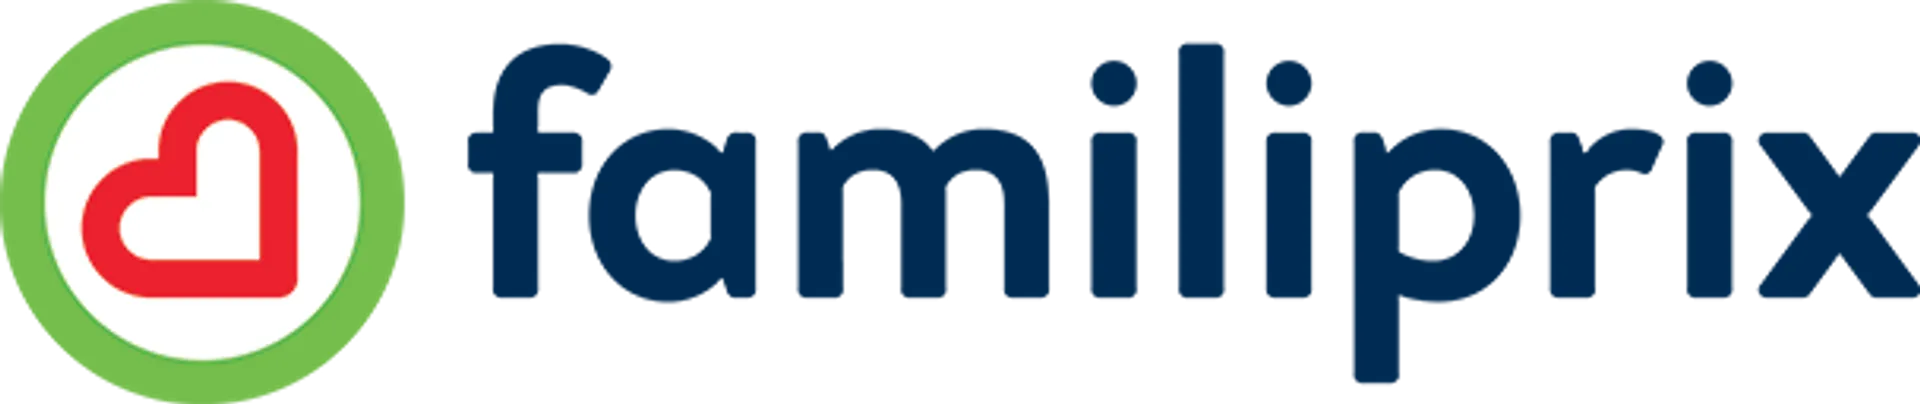 FAMILIPRIX logo de circulaire